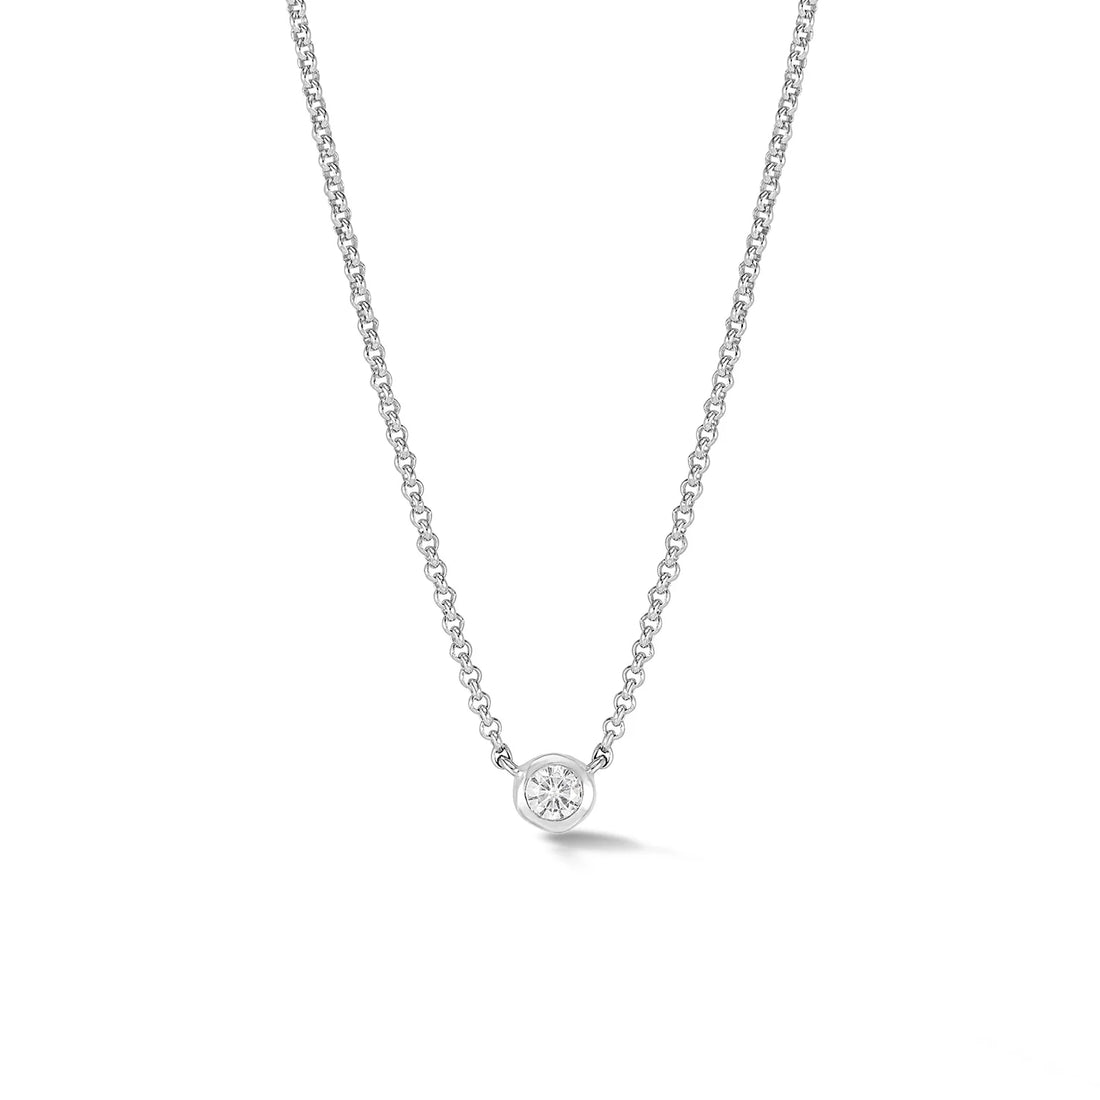 White Sapphire Dewdrop Necklace